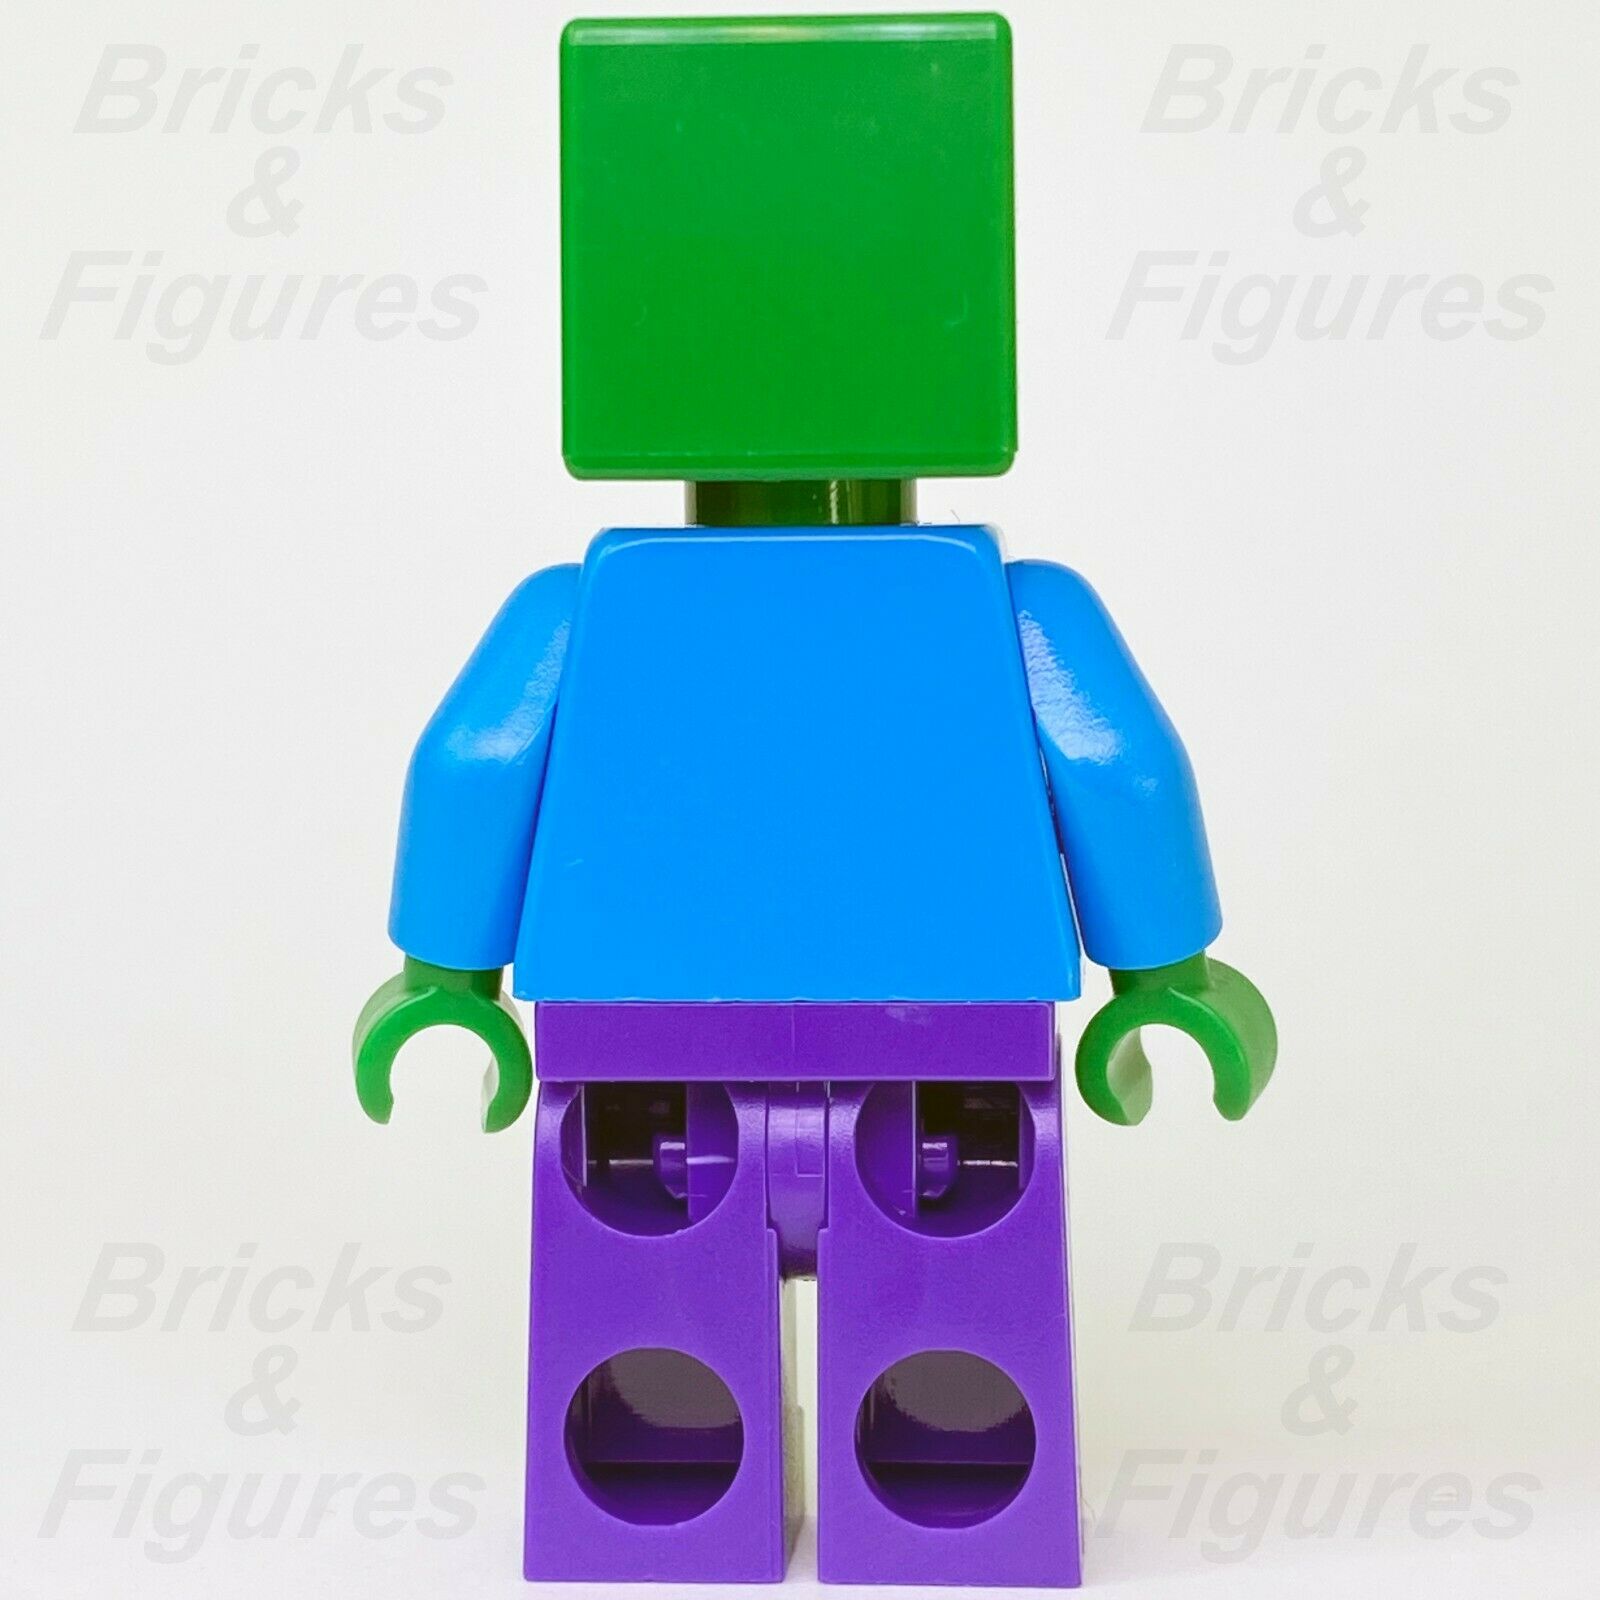 New Minecraft LEGO Zombie Minifigure 21147 21113 21119 21123 21118 21128 21134 - Bricks & Figures